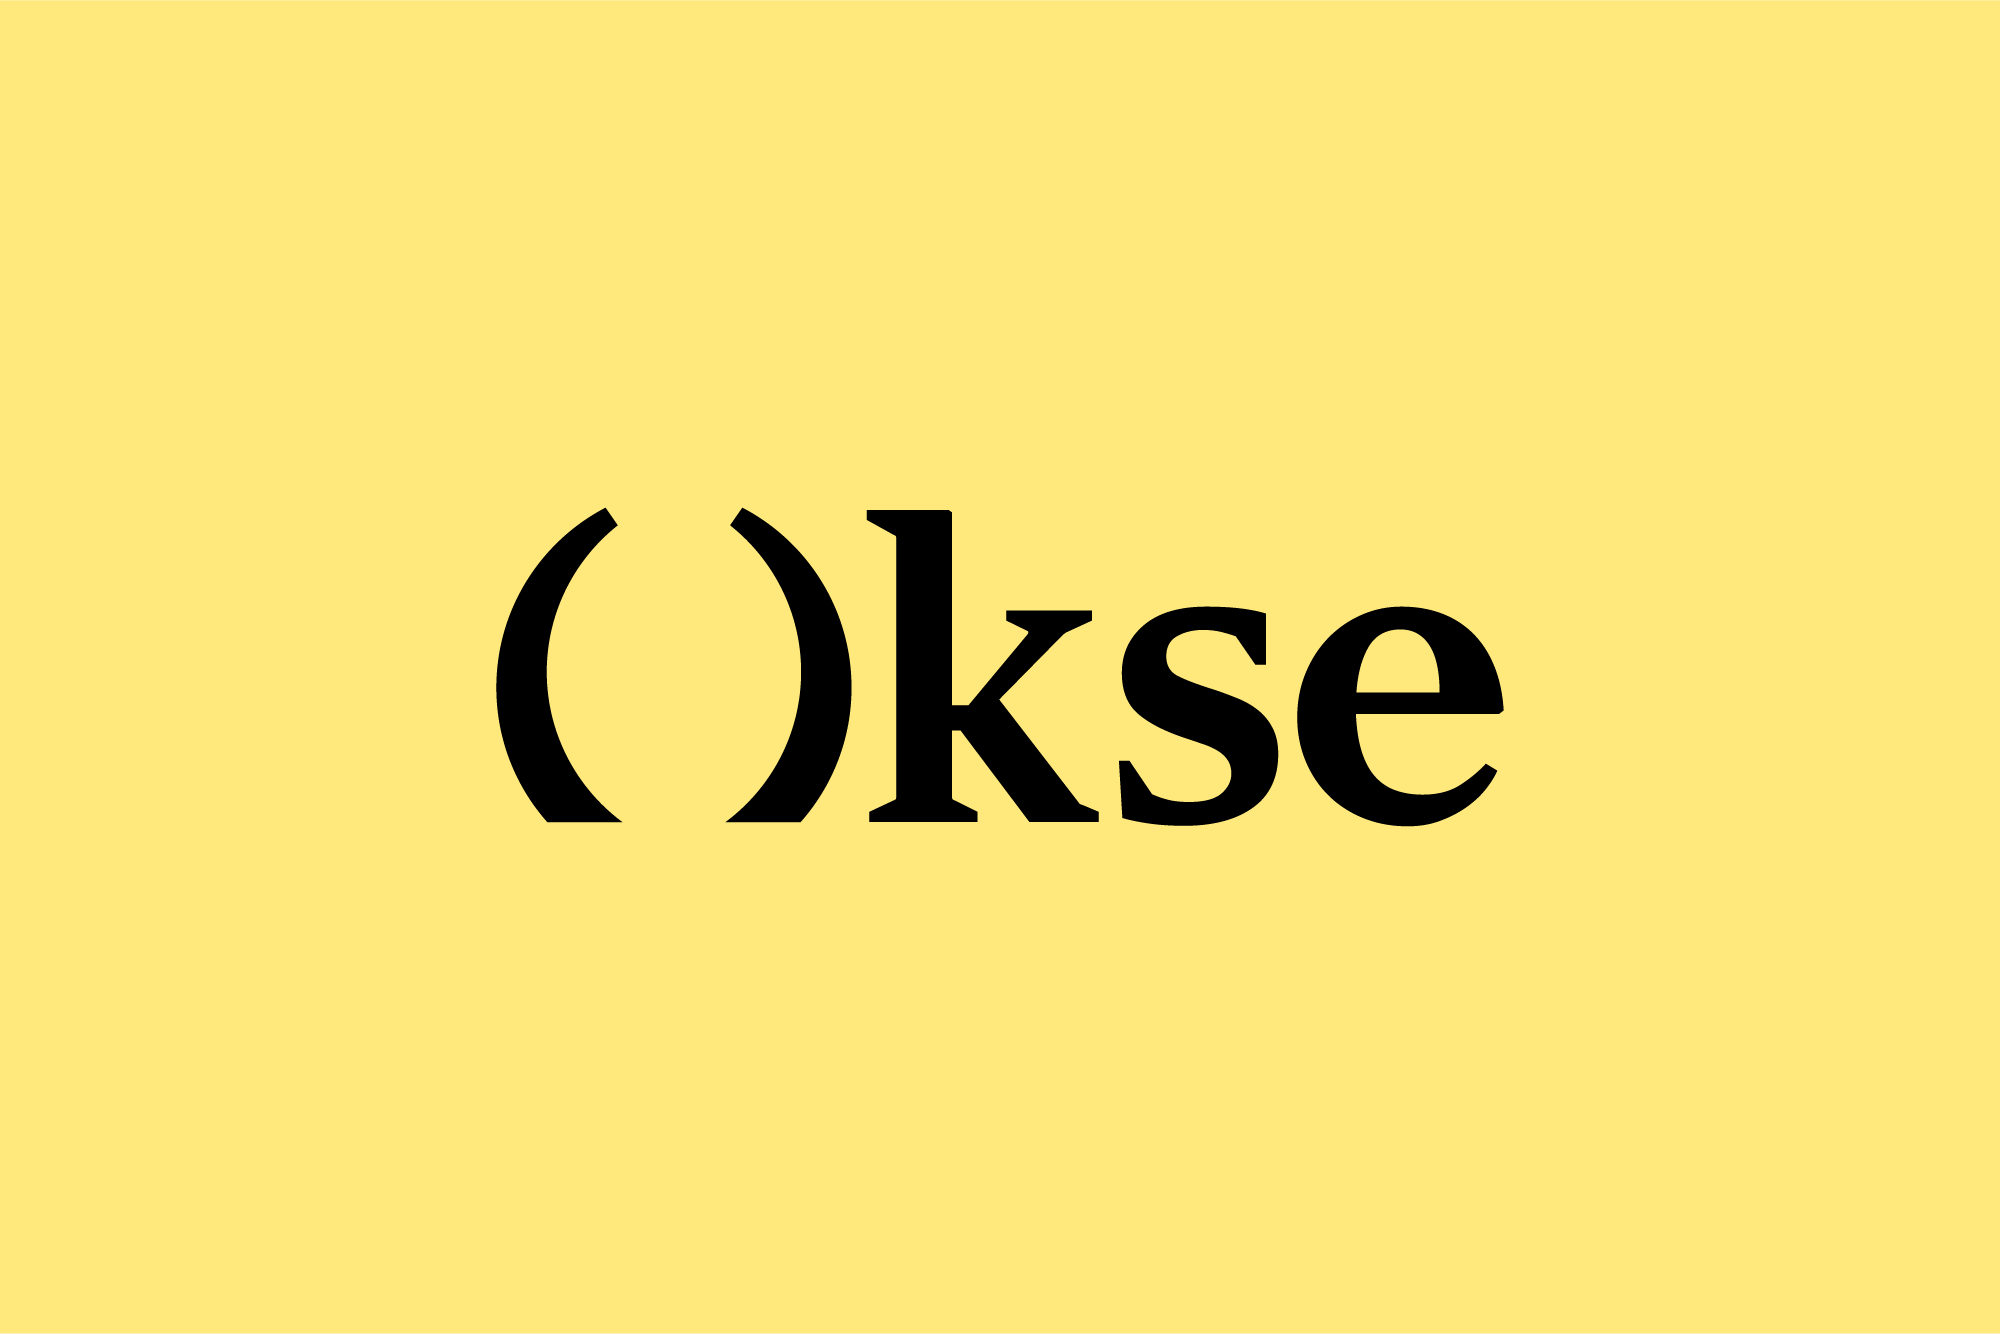 Studio Oker Creates a New Identity for Okse